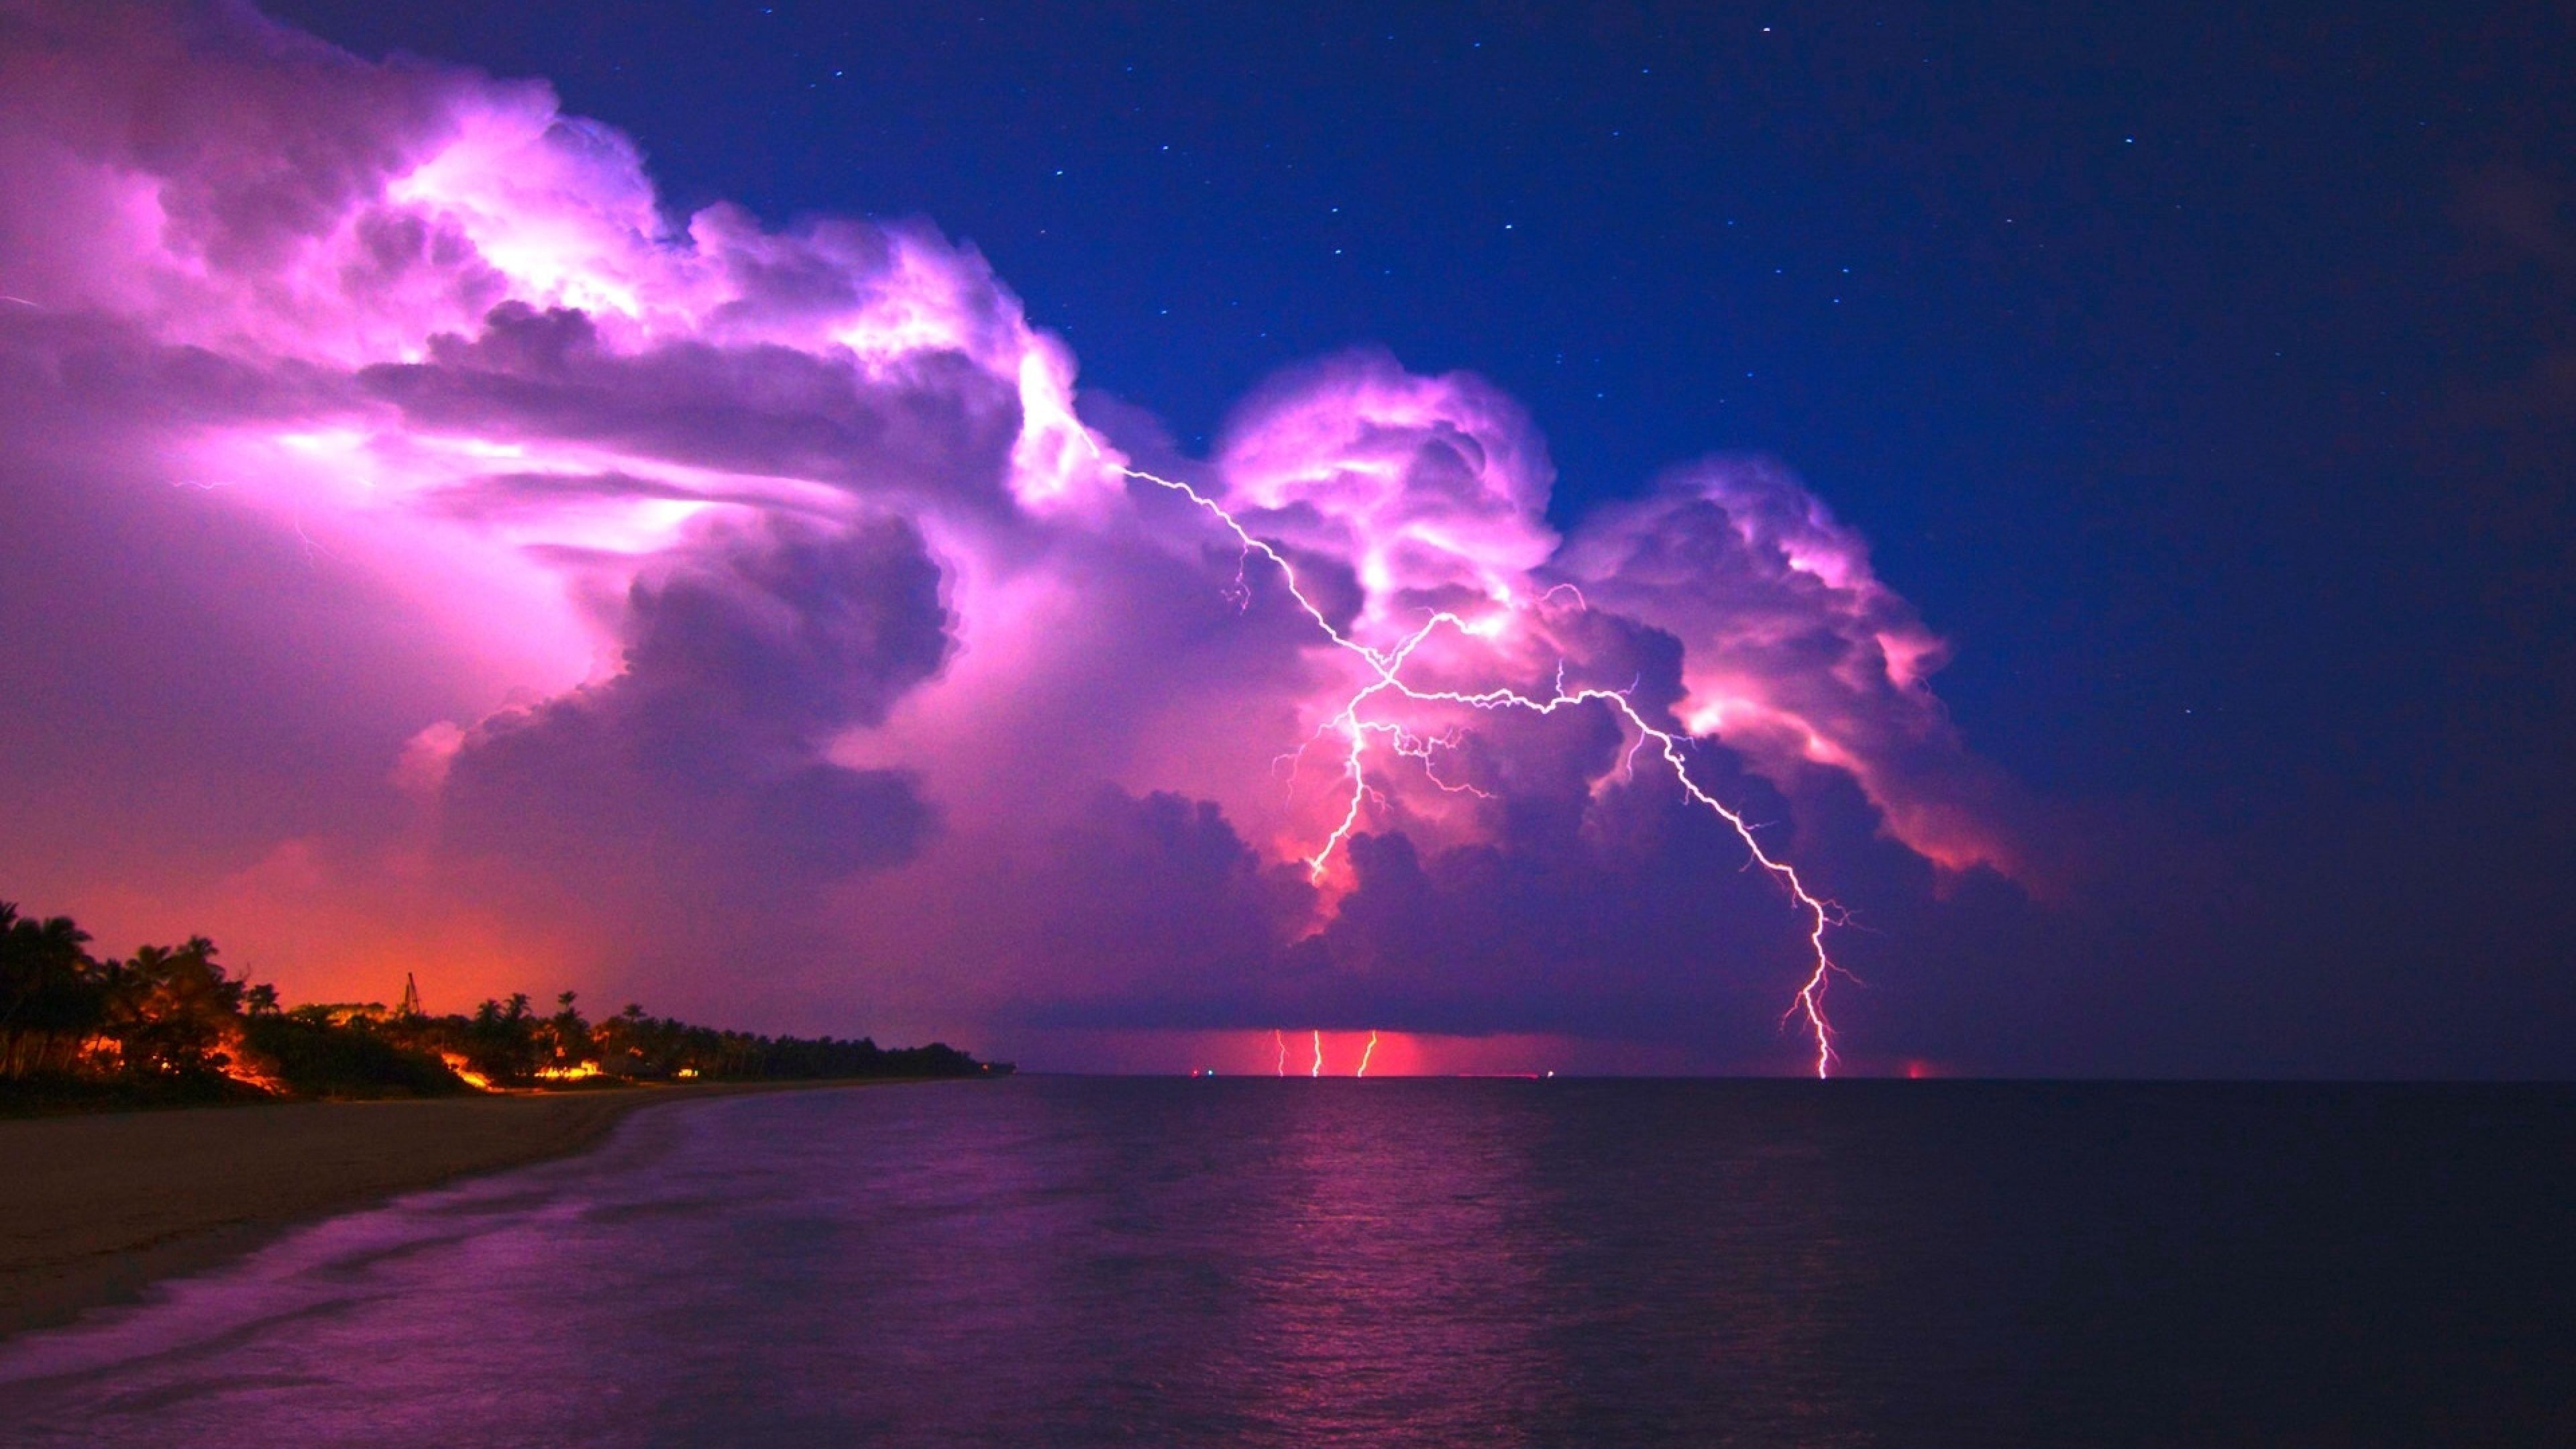 A purple lightning bolt strikes the sky over water - Lightning, storm